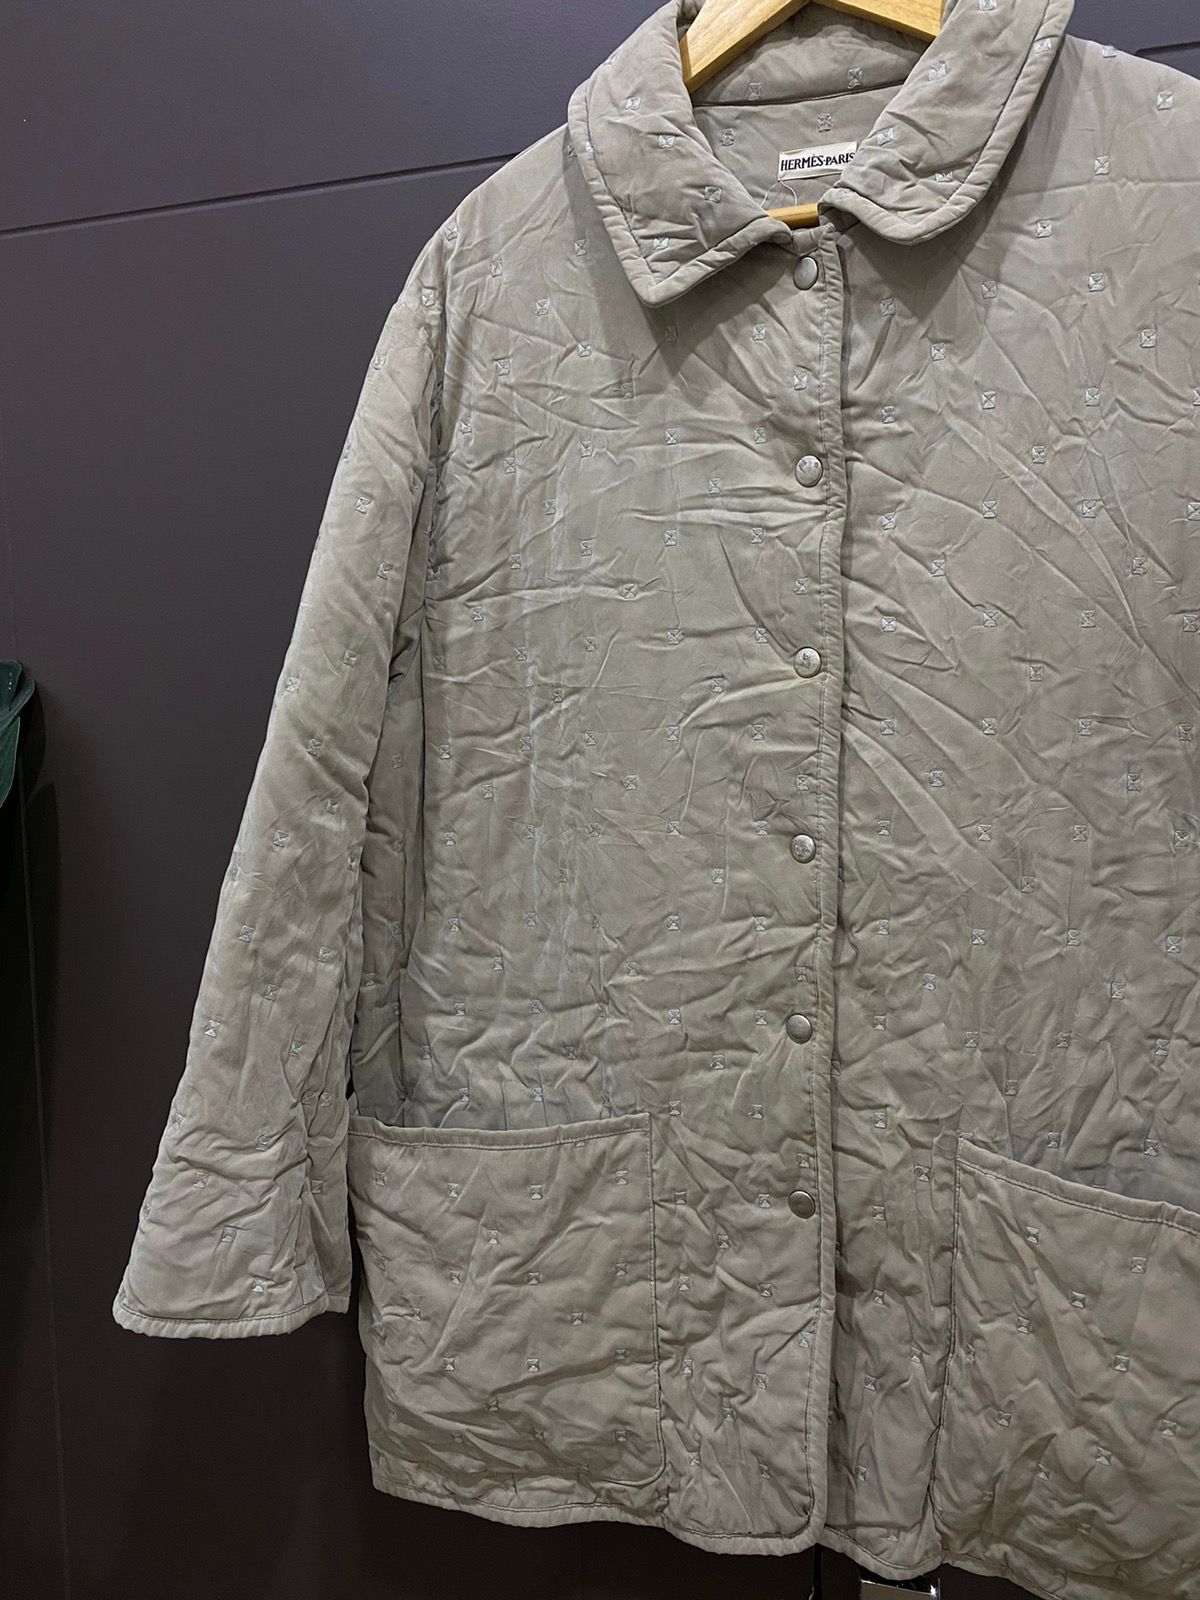 Authentic Hermès Jacket Beige Quilted France 42 Coat - 4